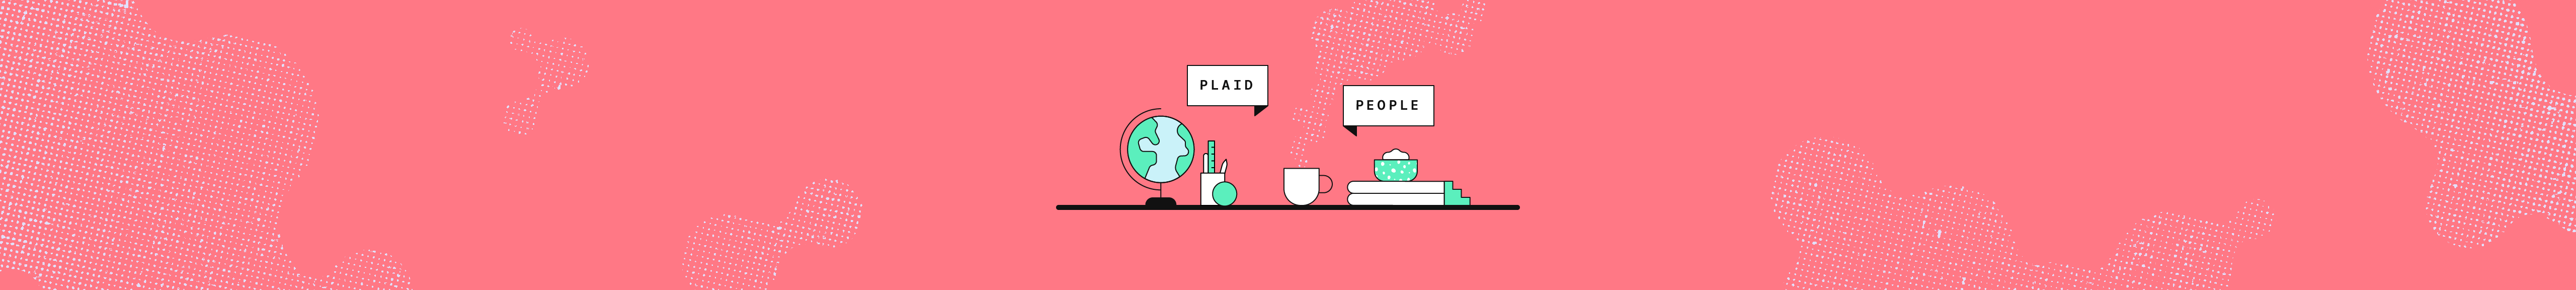 Plaid People: Jake Stern banner